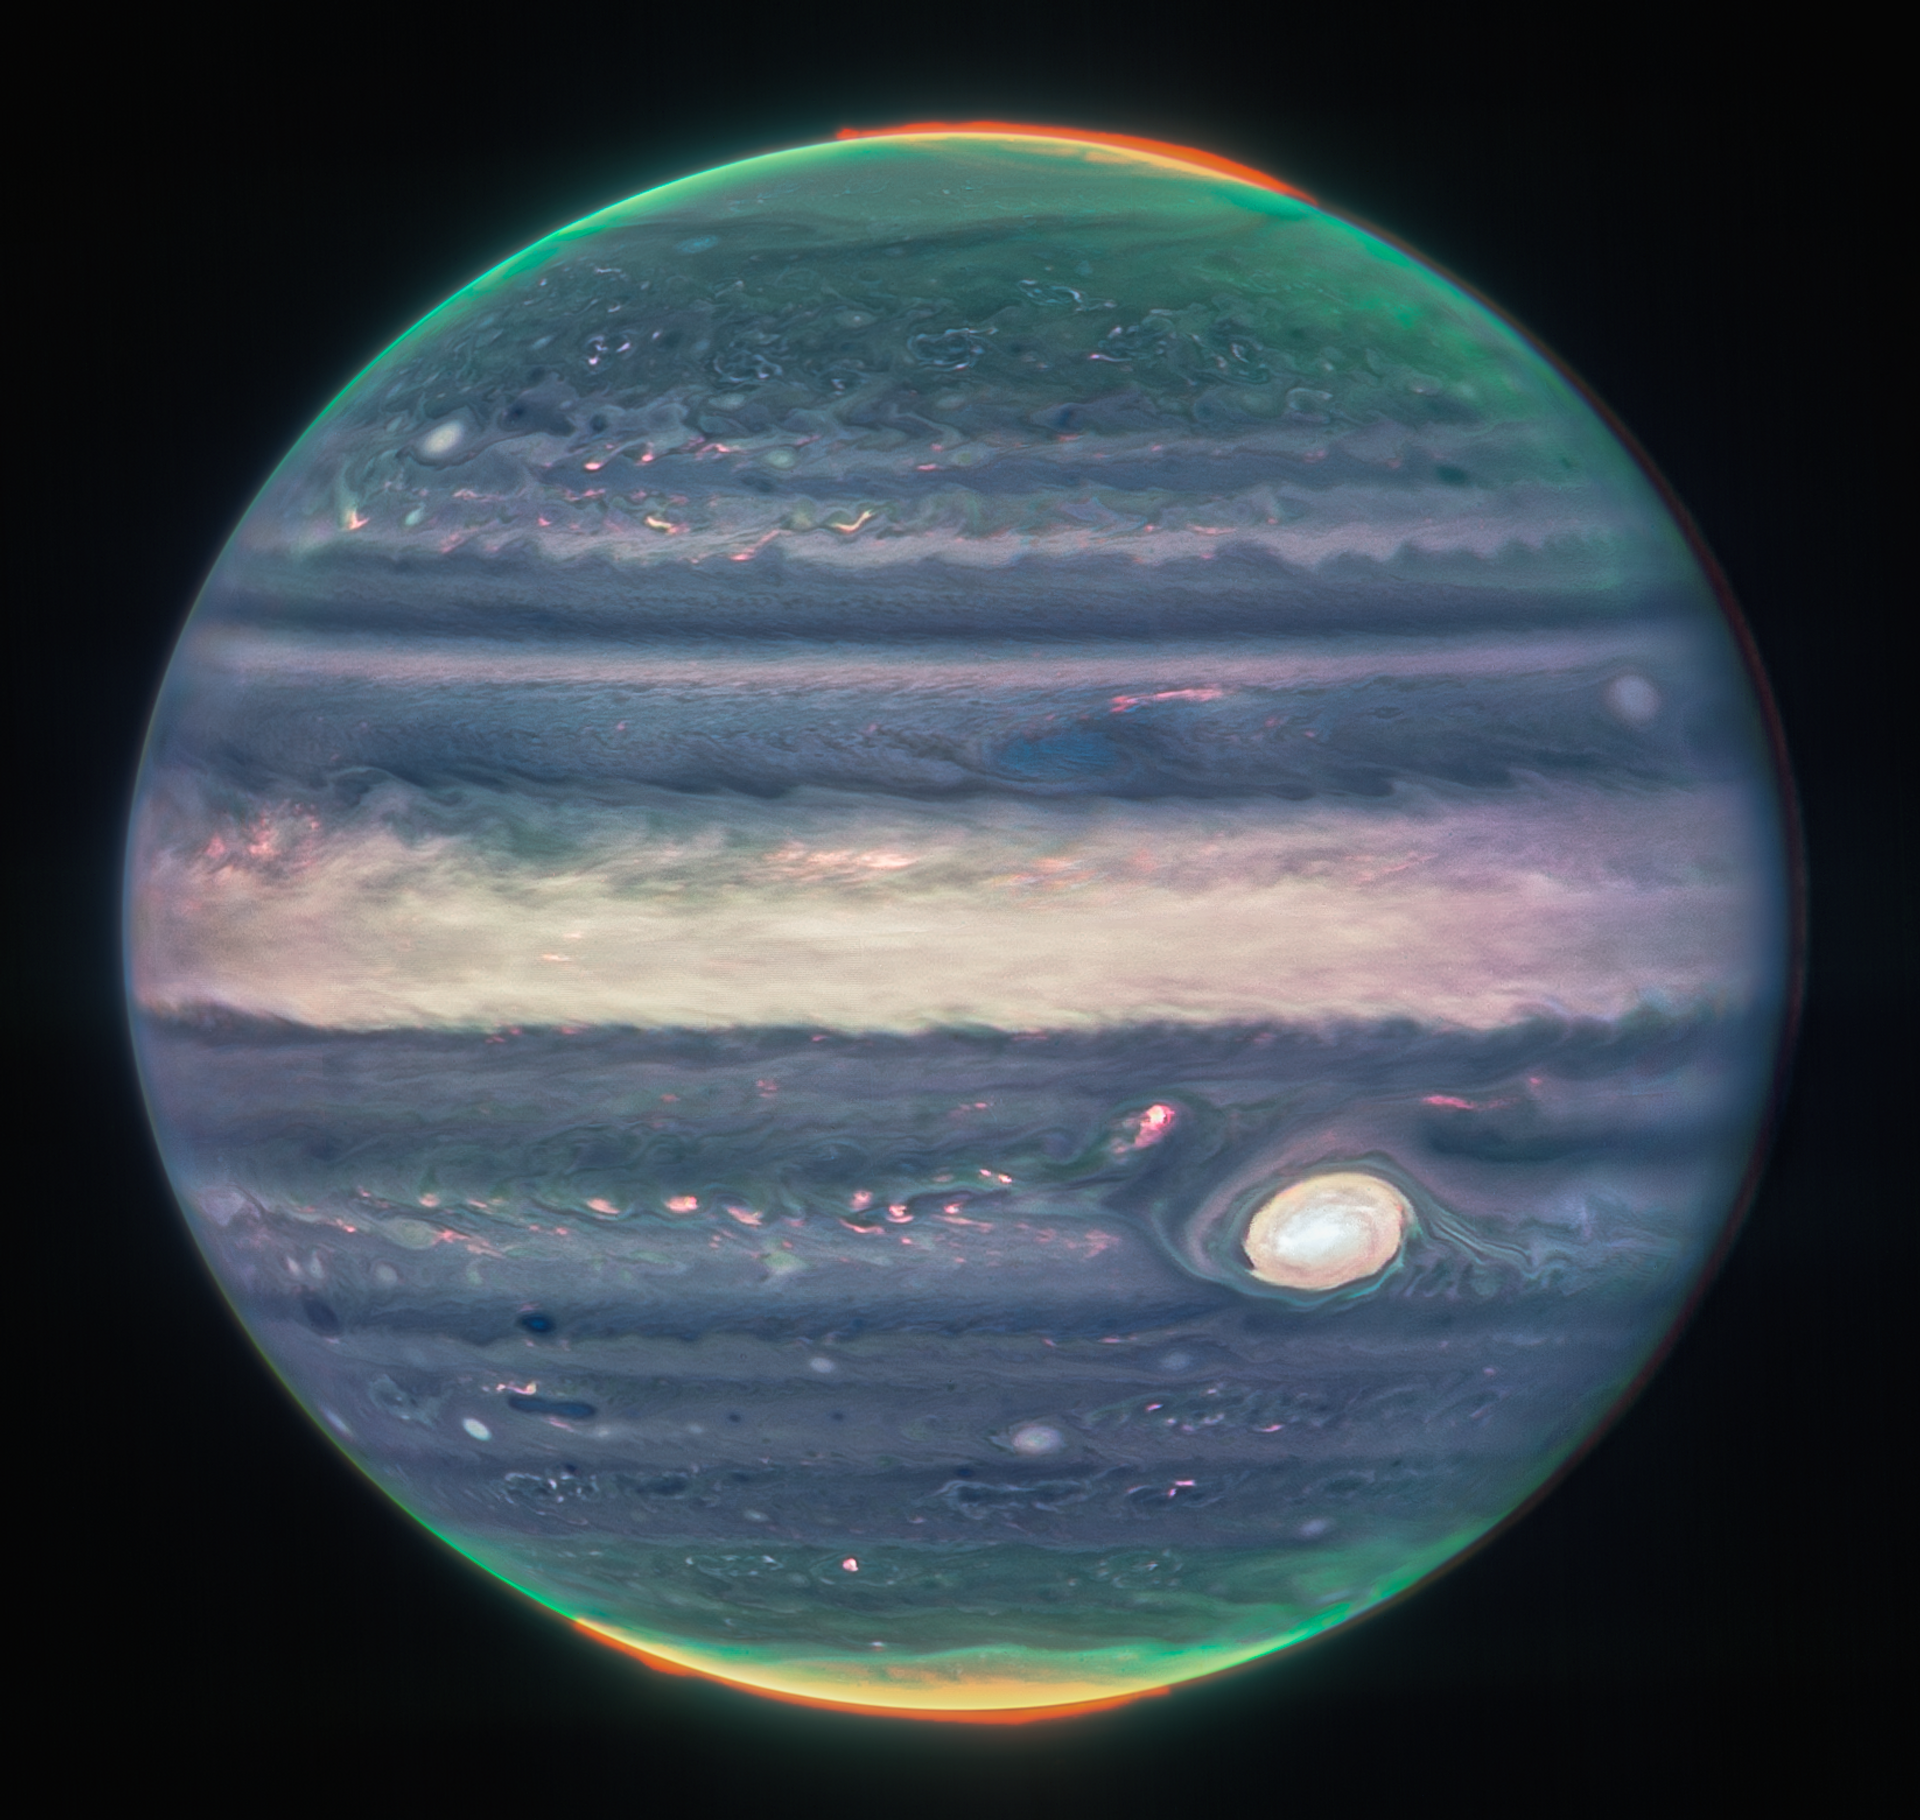 Novas imagens de Júpiter do Telescópio da Nasa James Webb - Sputnik Brasil, 1920, 25.08.2022